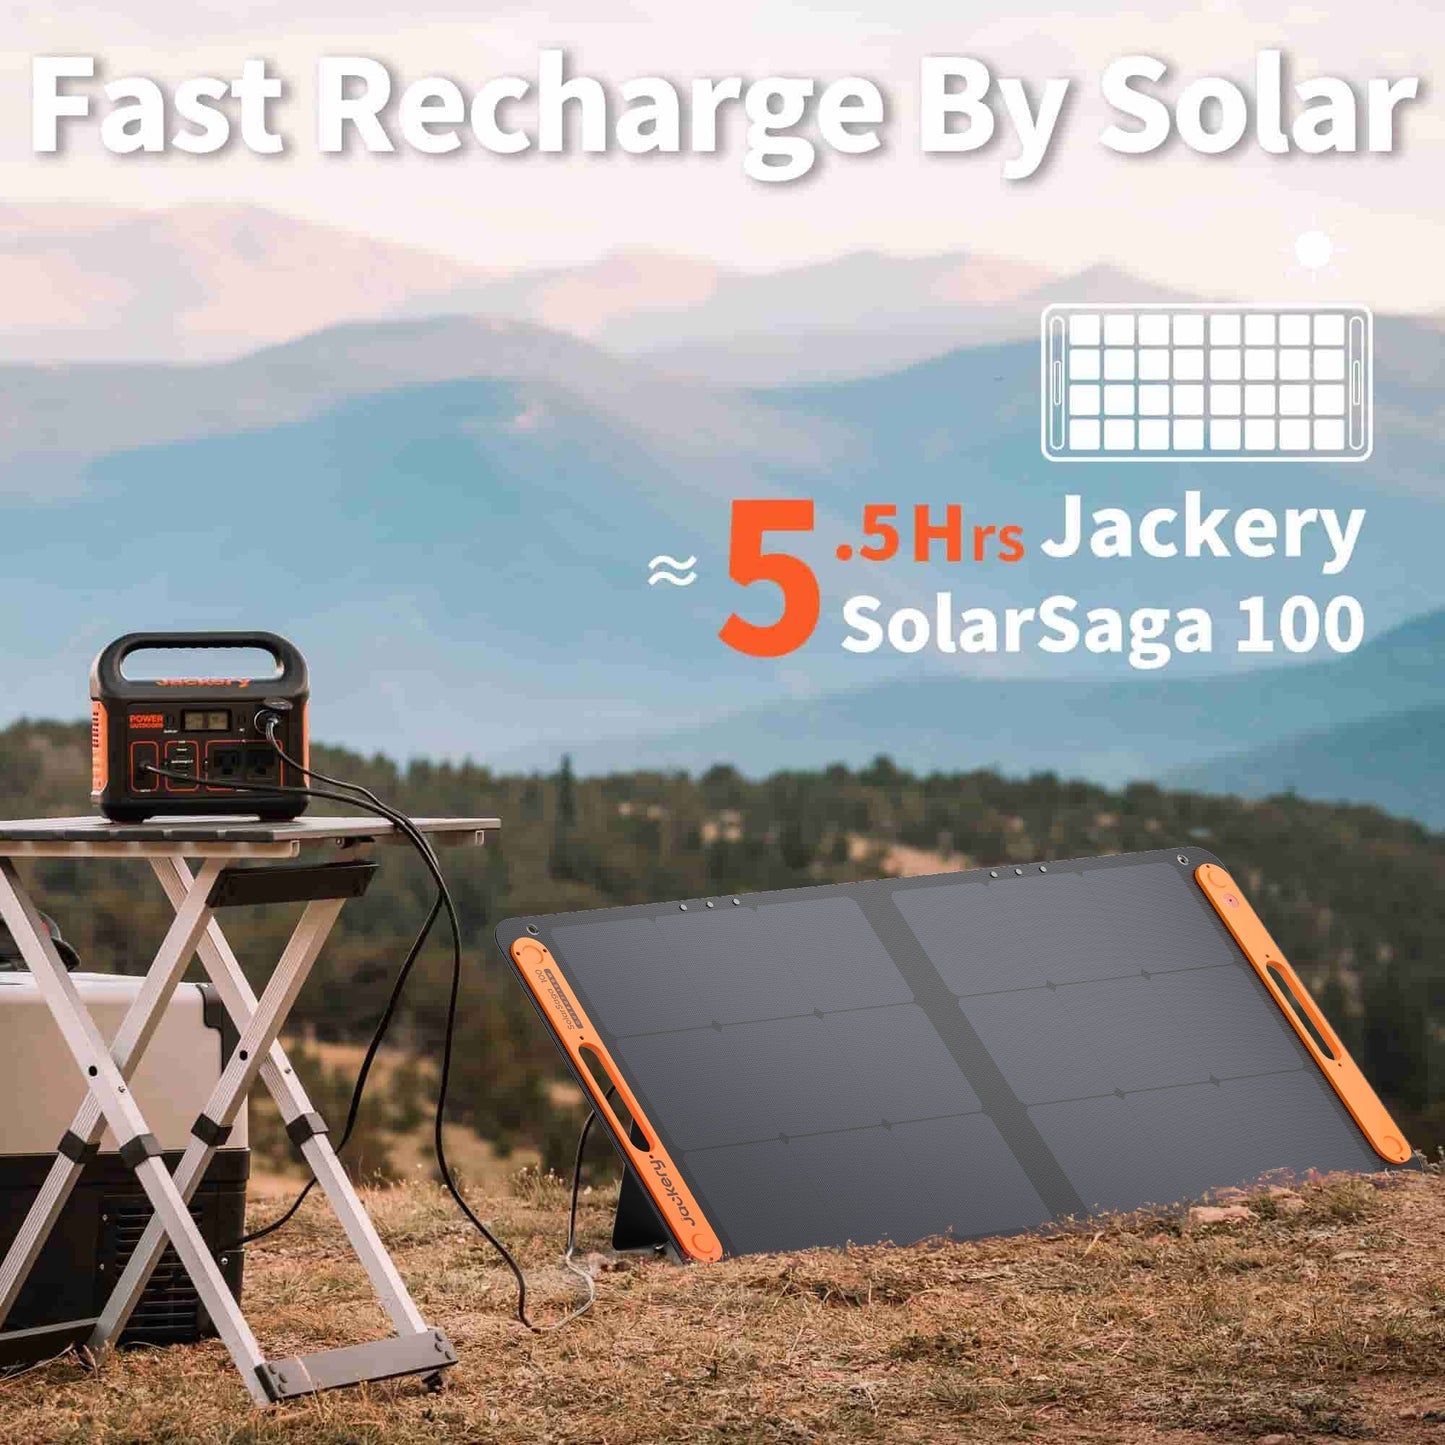 Jackery Solar Generator 300 Plus